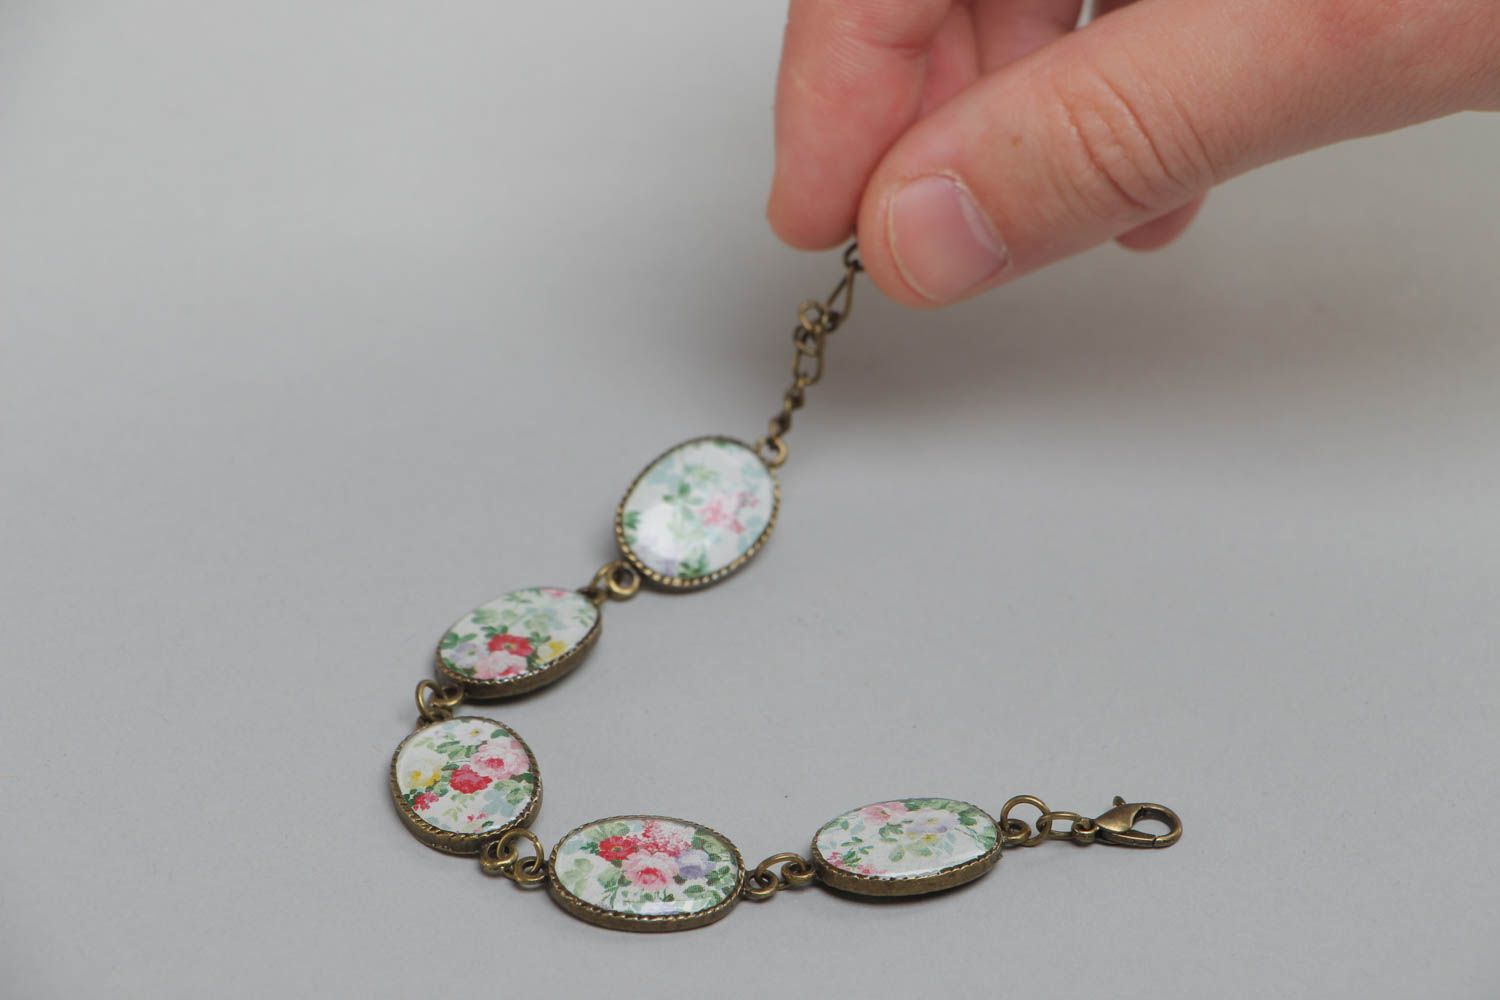 Handmade metal and glass glaze wrist bracelet with chain and flower pattern photo 5